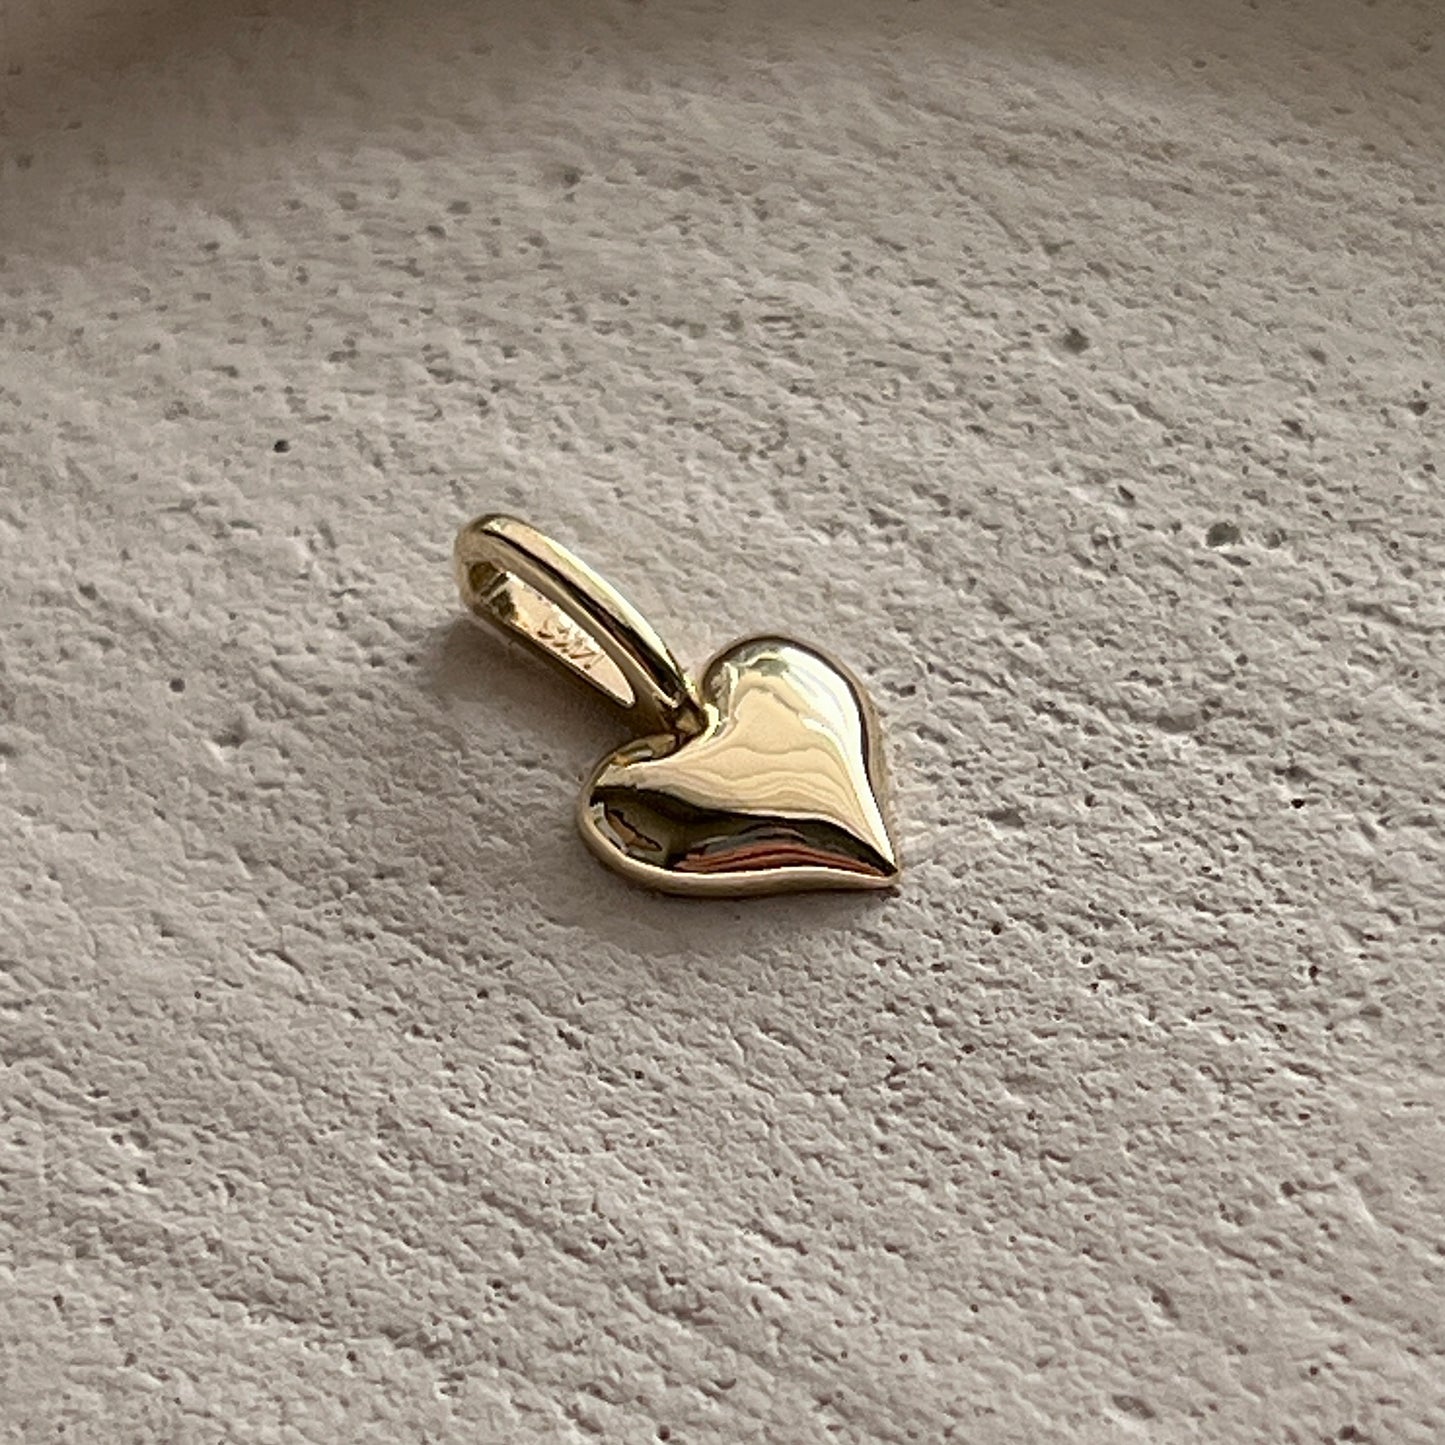 14K Yellow Gold Heart Pendant